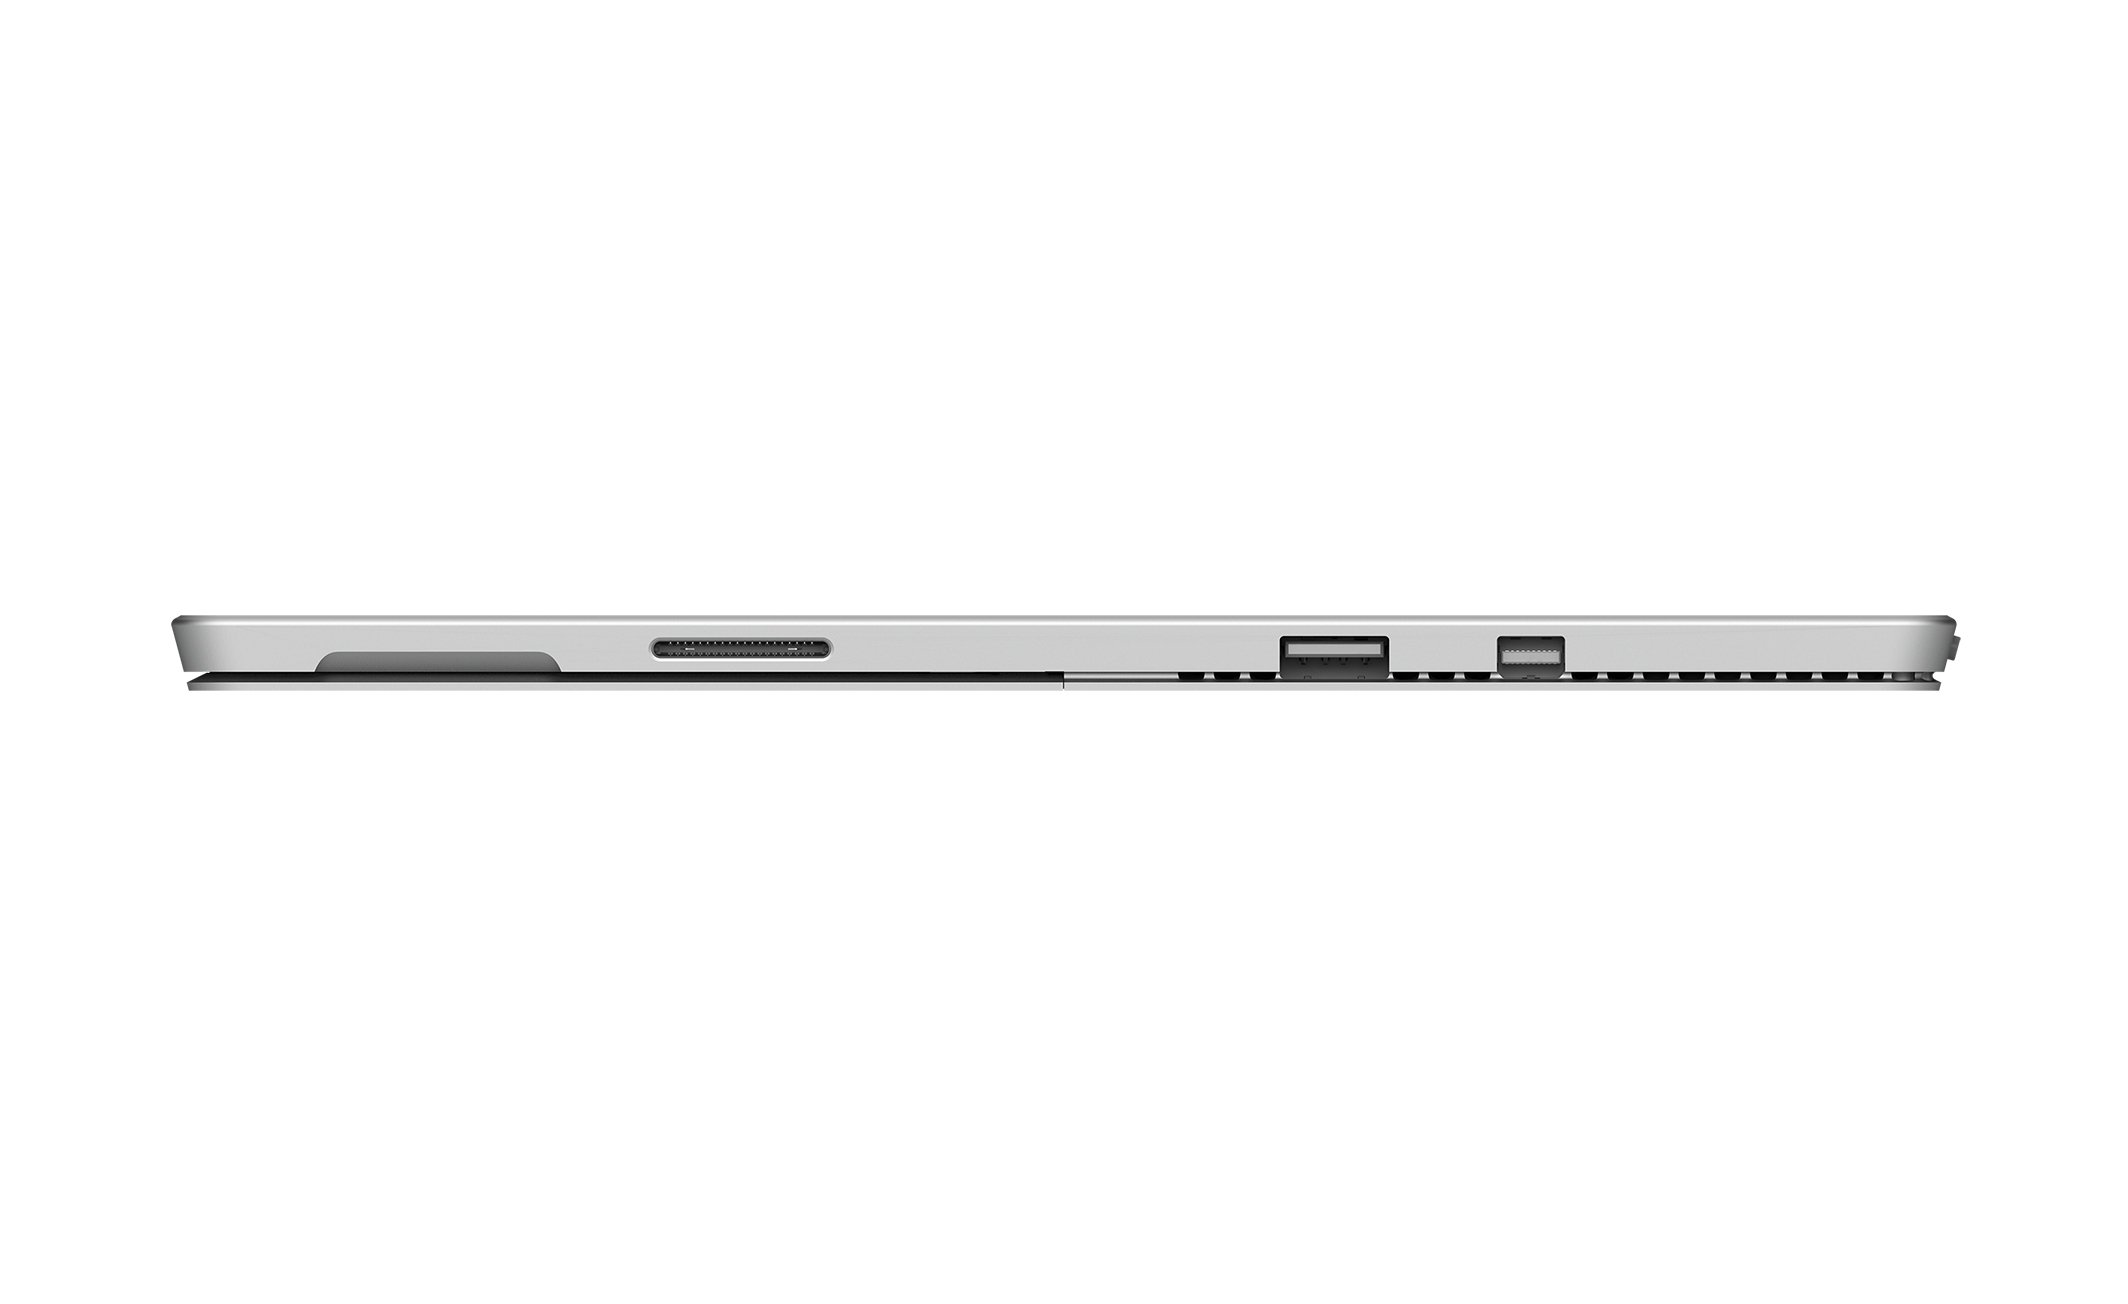 Microsoft Surface Pro 4 (256 GB, 8 GB RAM, Intel Core i5)